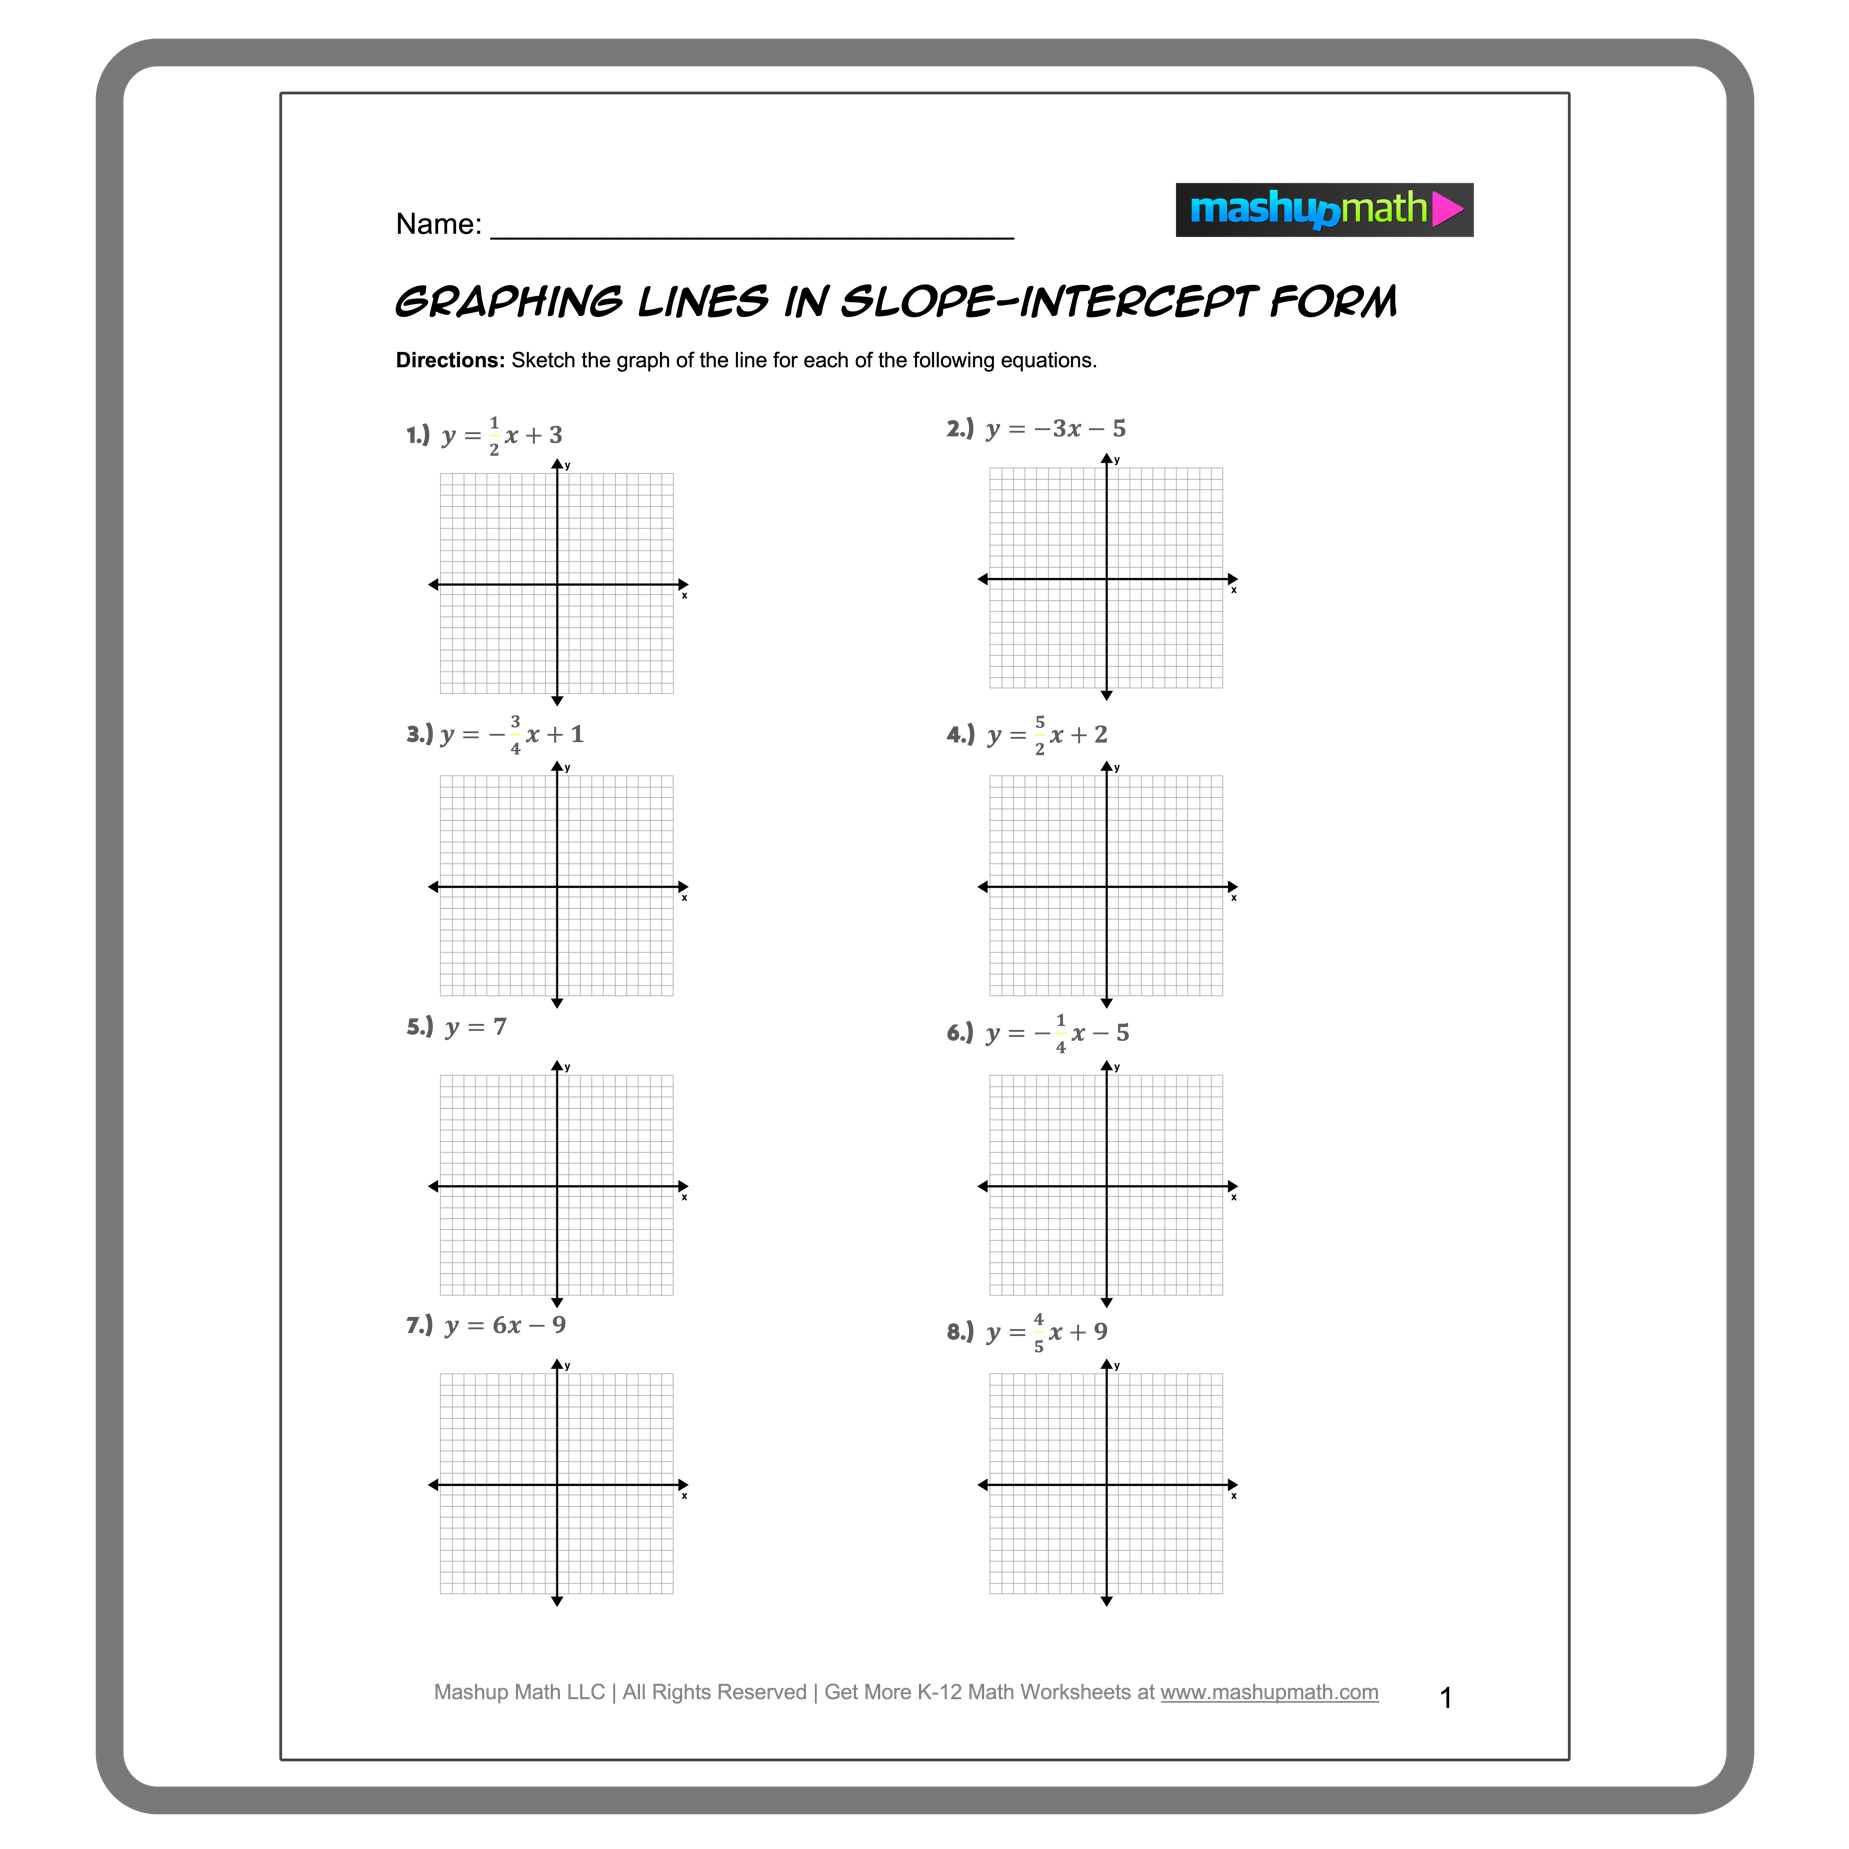 homework 2 standard & slope intercept form answer key